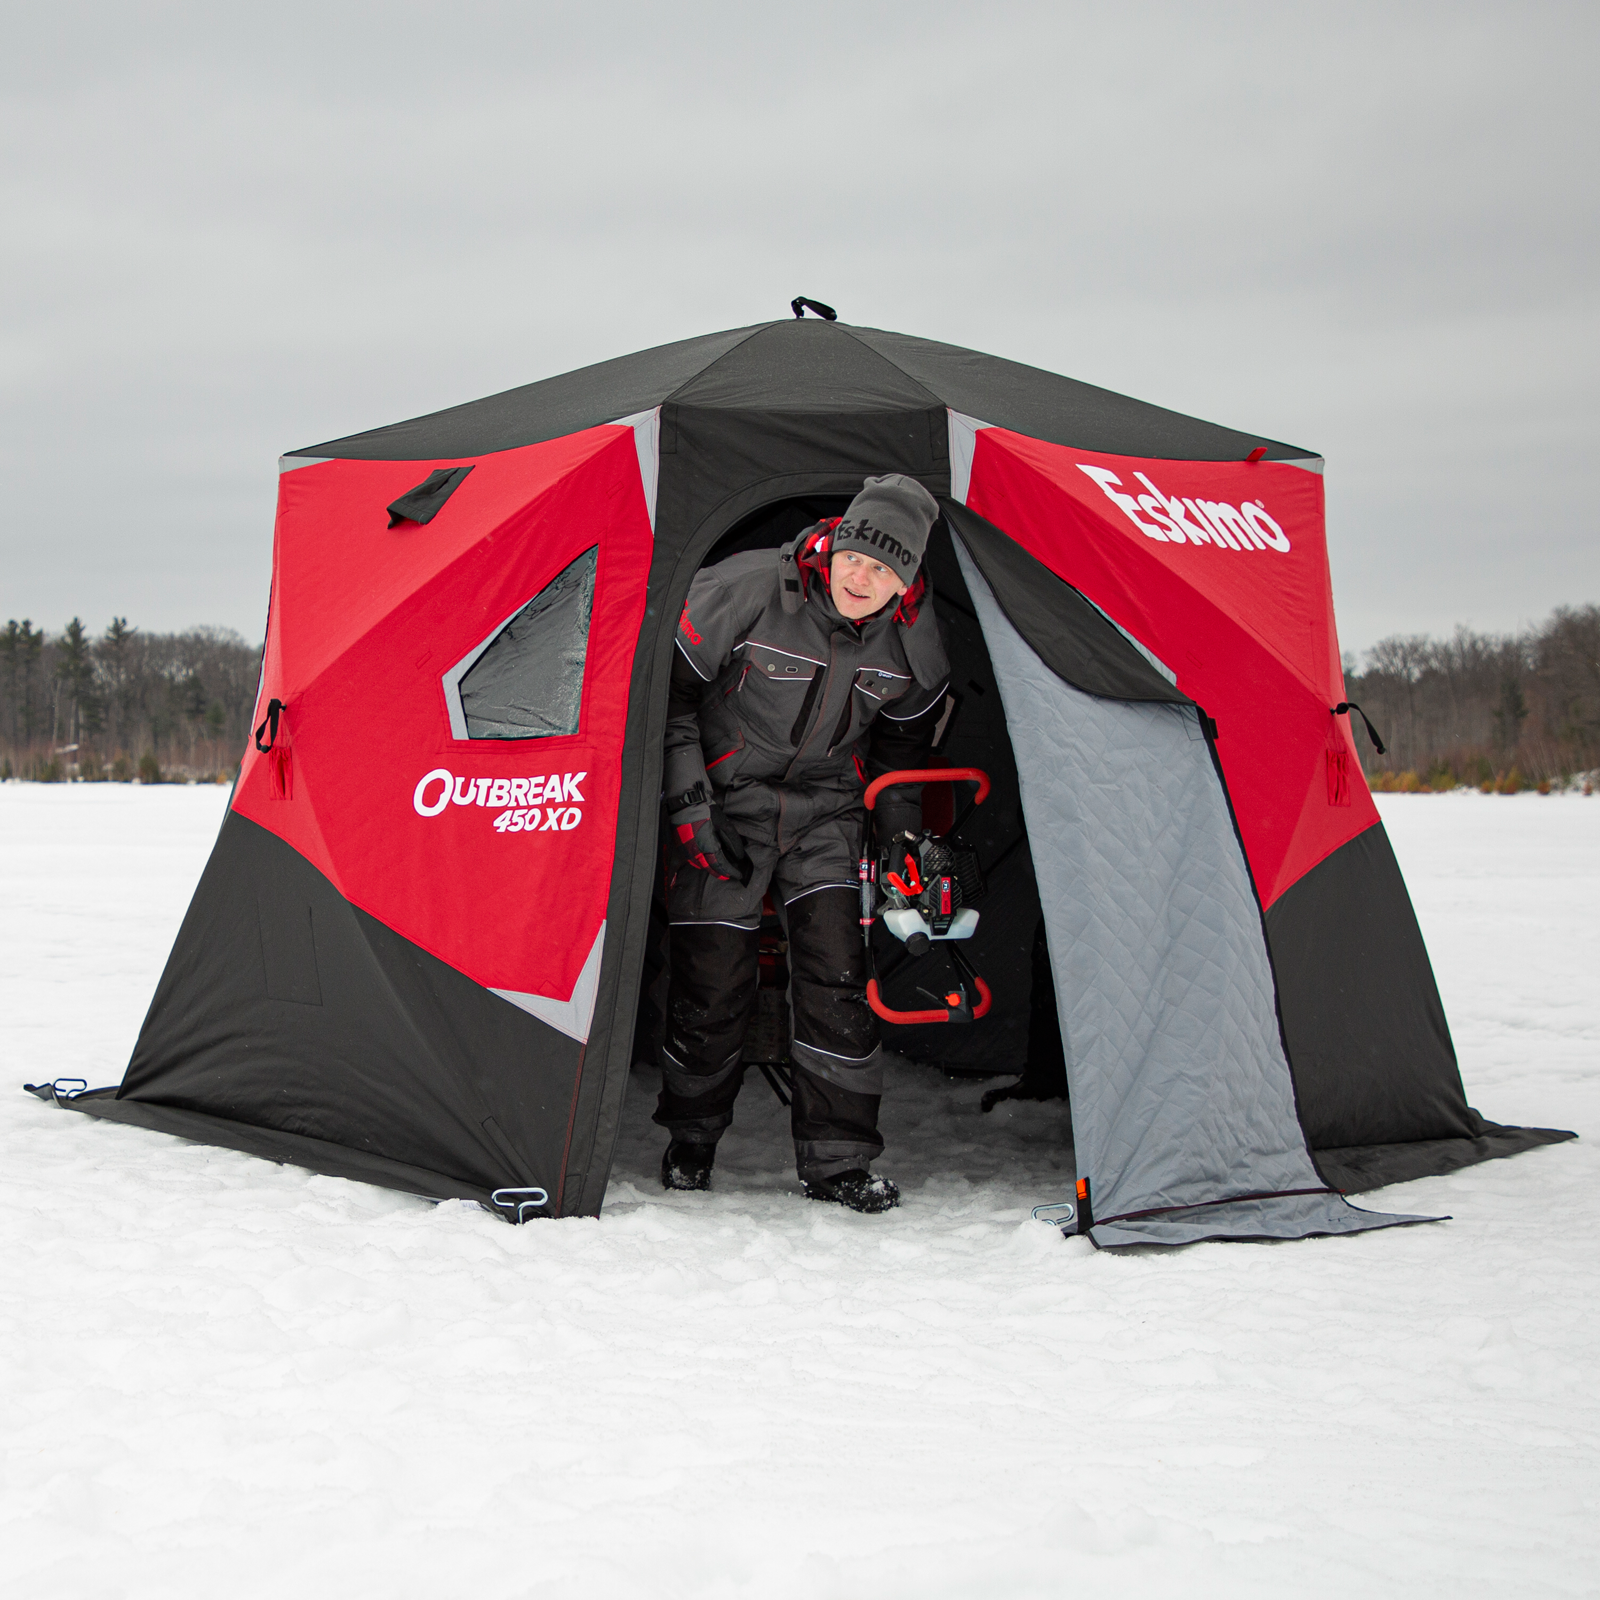 Eskimo Ice Shelter Outbreak 250 Xd Insulated